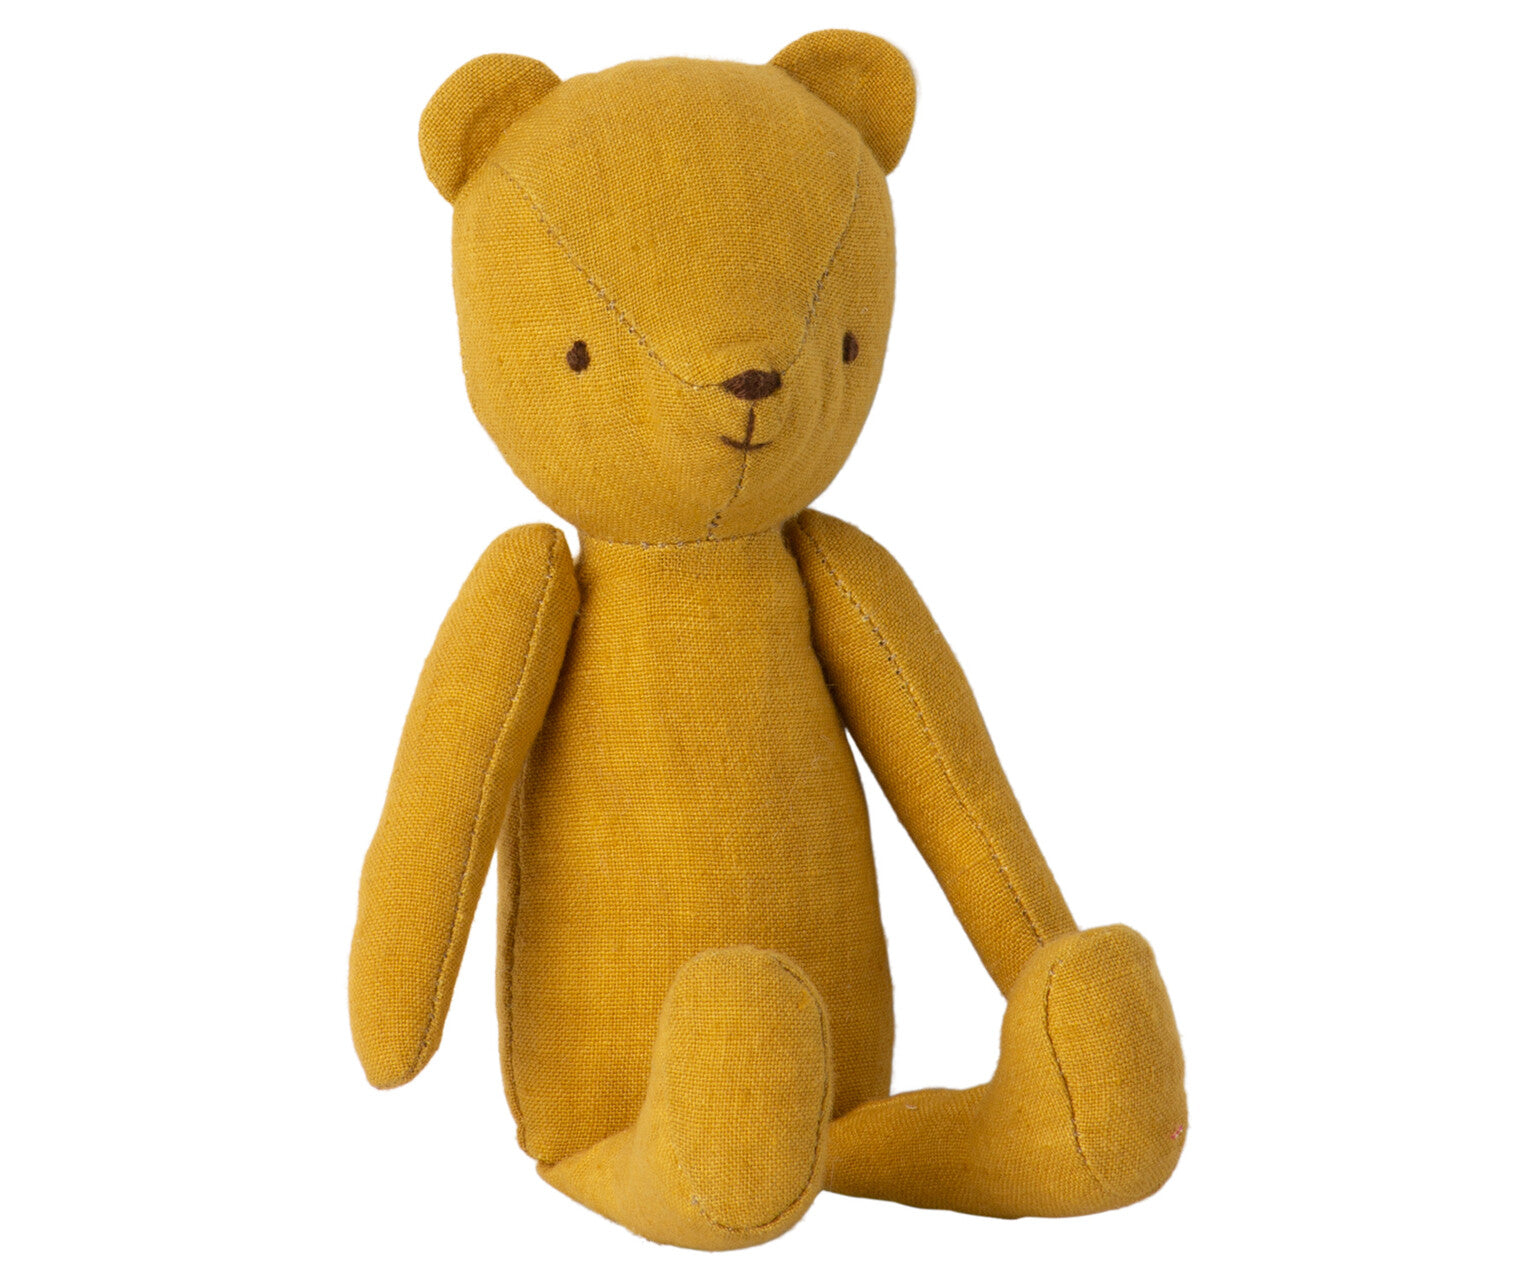 Teddy Junior: Cute Plush Toy for Kids' Cuddles & Playtime